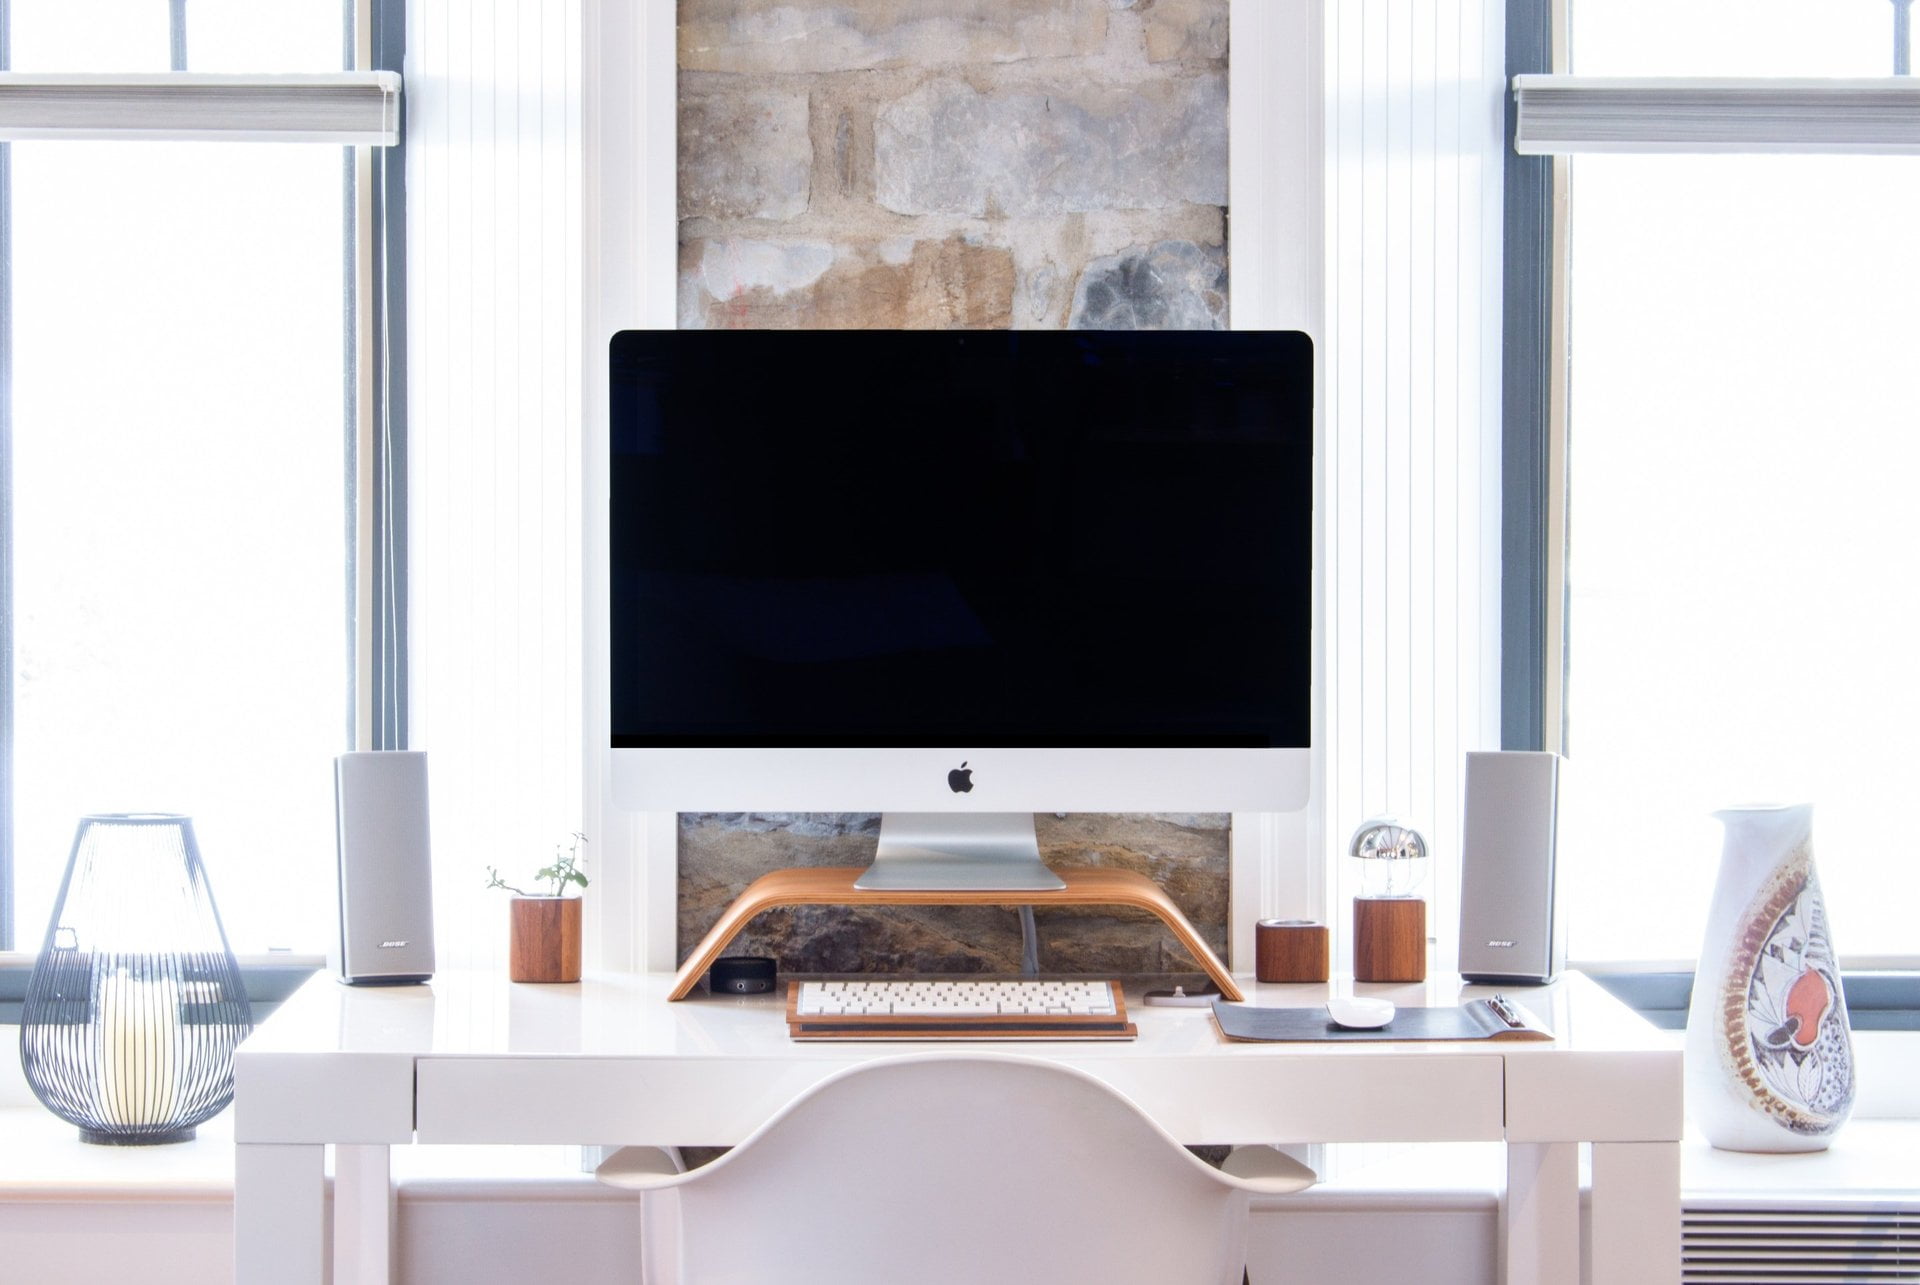 Mac monitor and keyboard on a desk